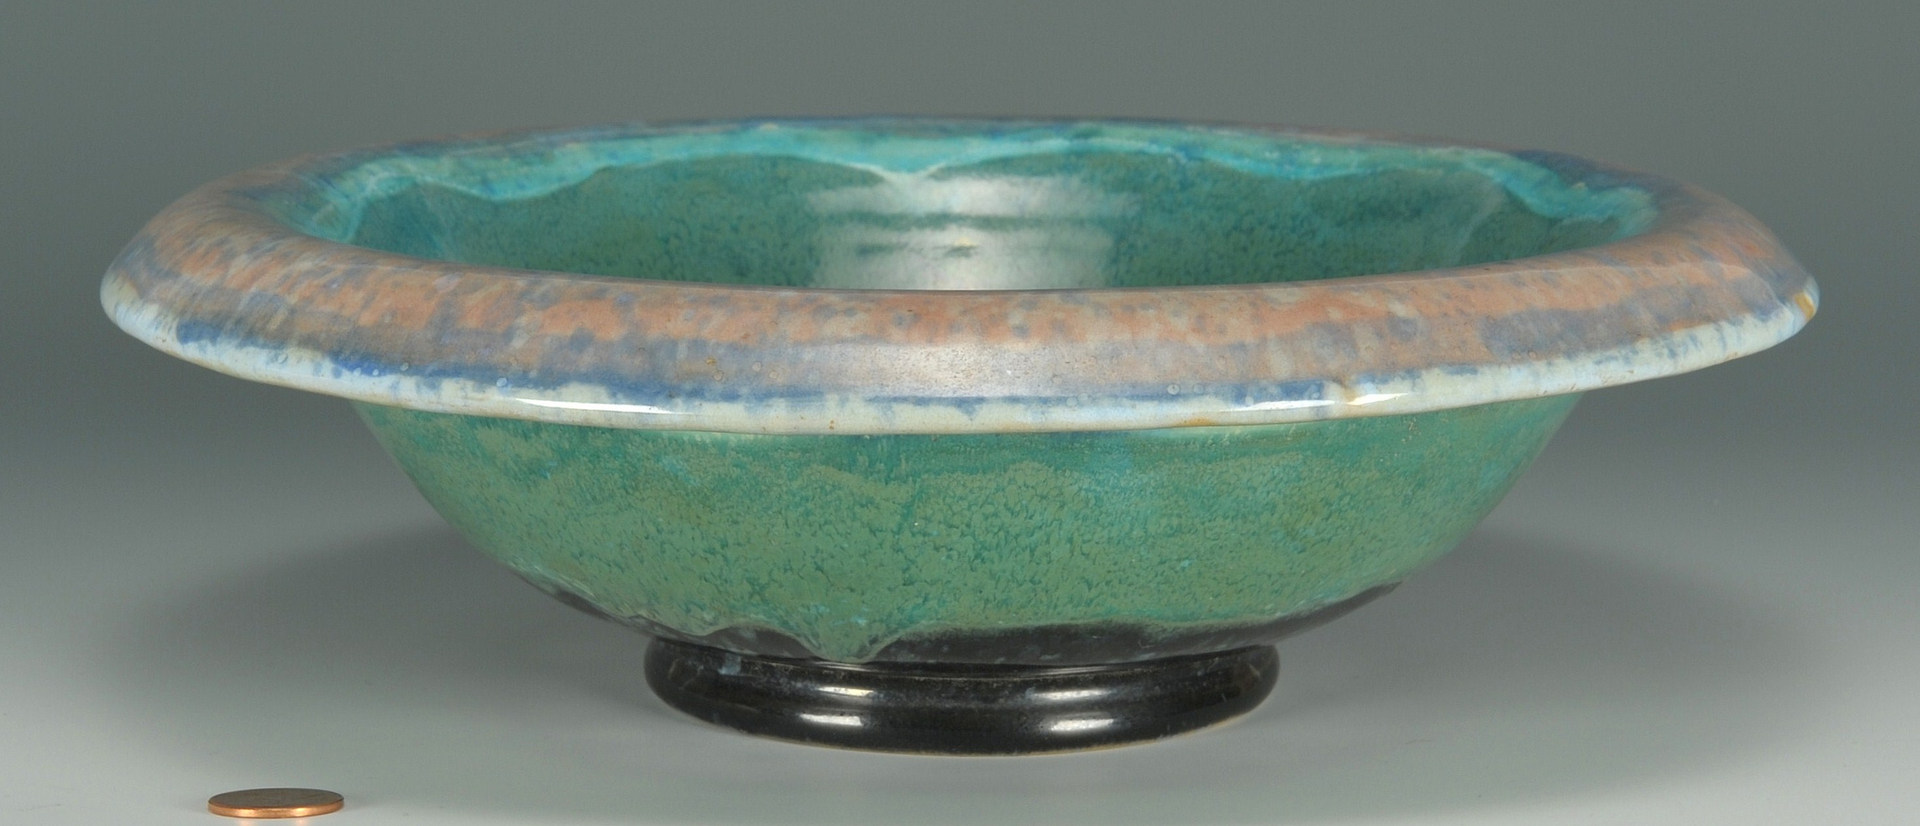 Lot 283: Art pottery bowl in the Fulper style